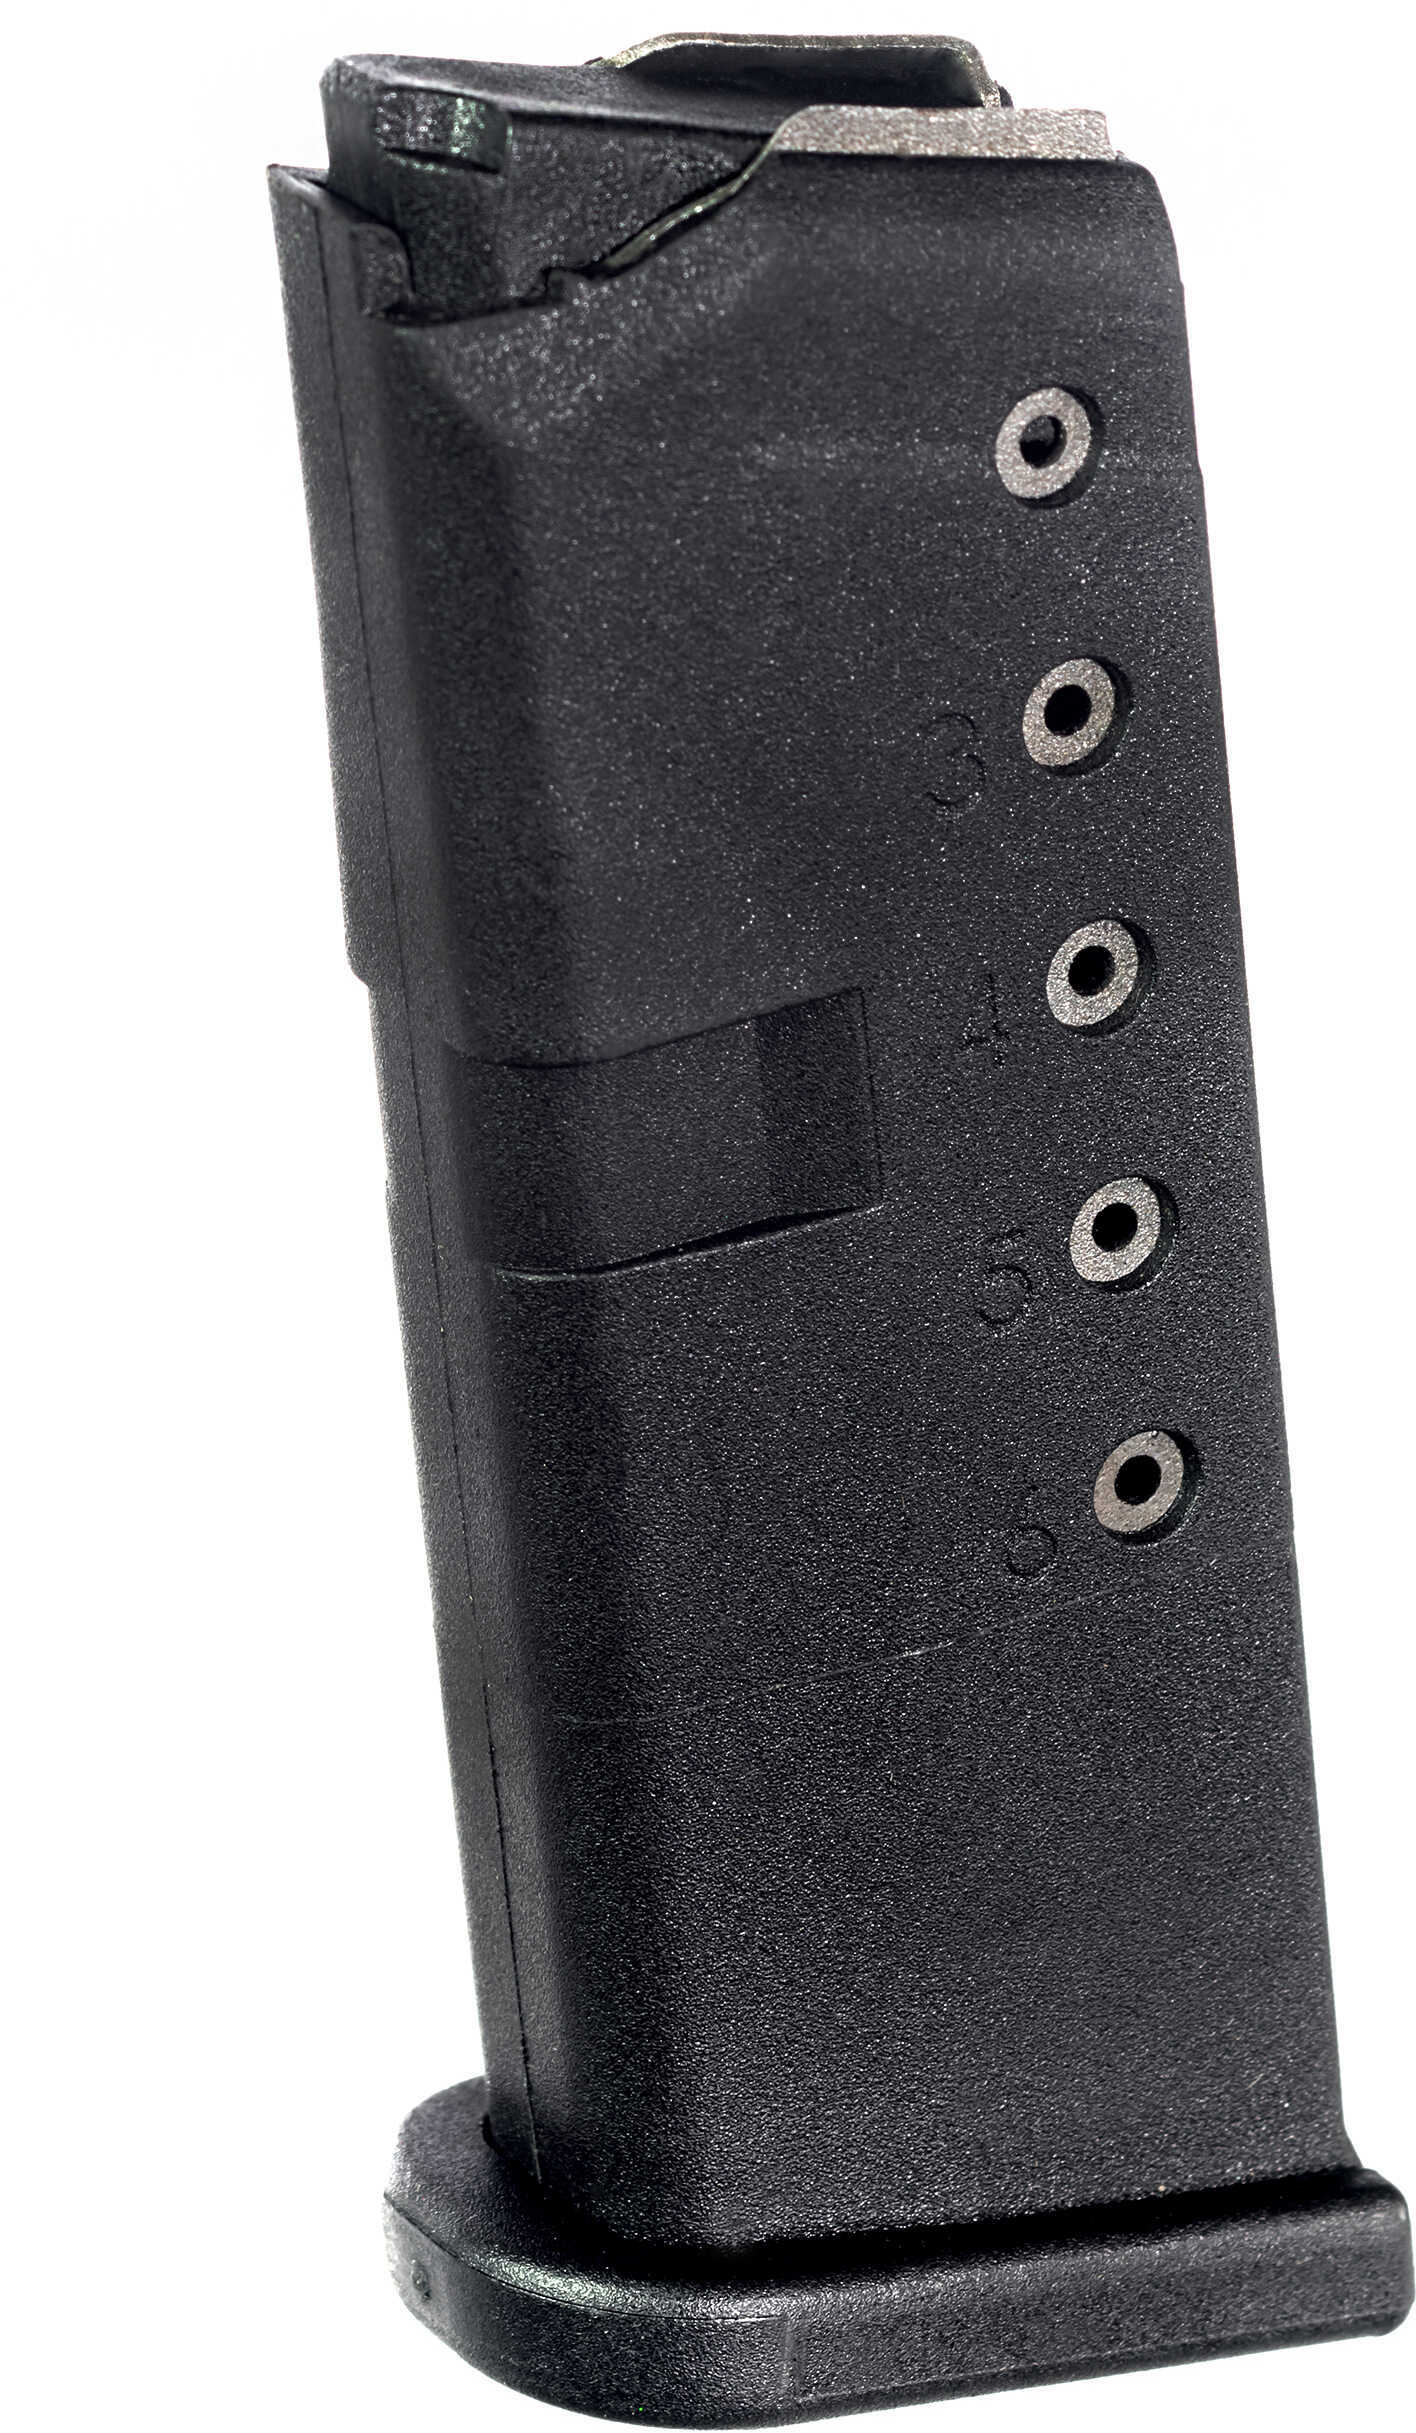 ProMag for Glock 42 / .380 ACP , 6-Round Capacity Magazine, Black Polymer Md: GLK 10